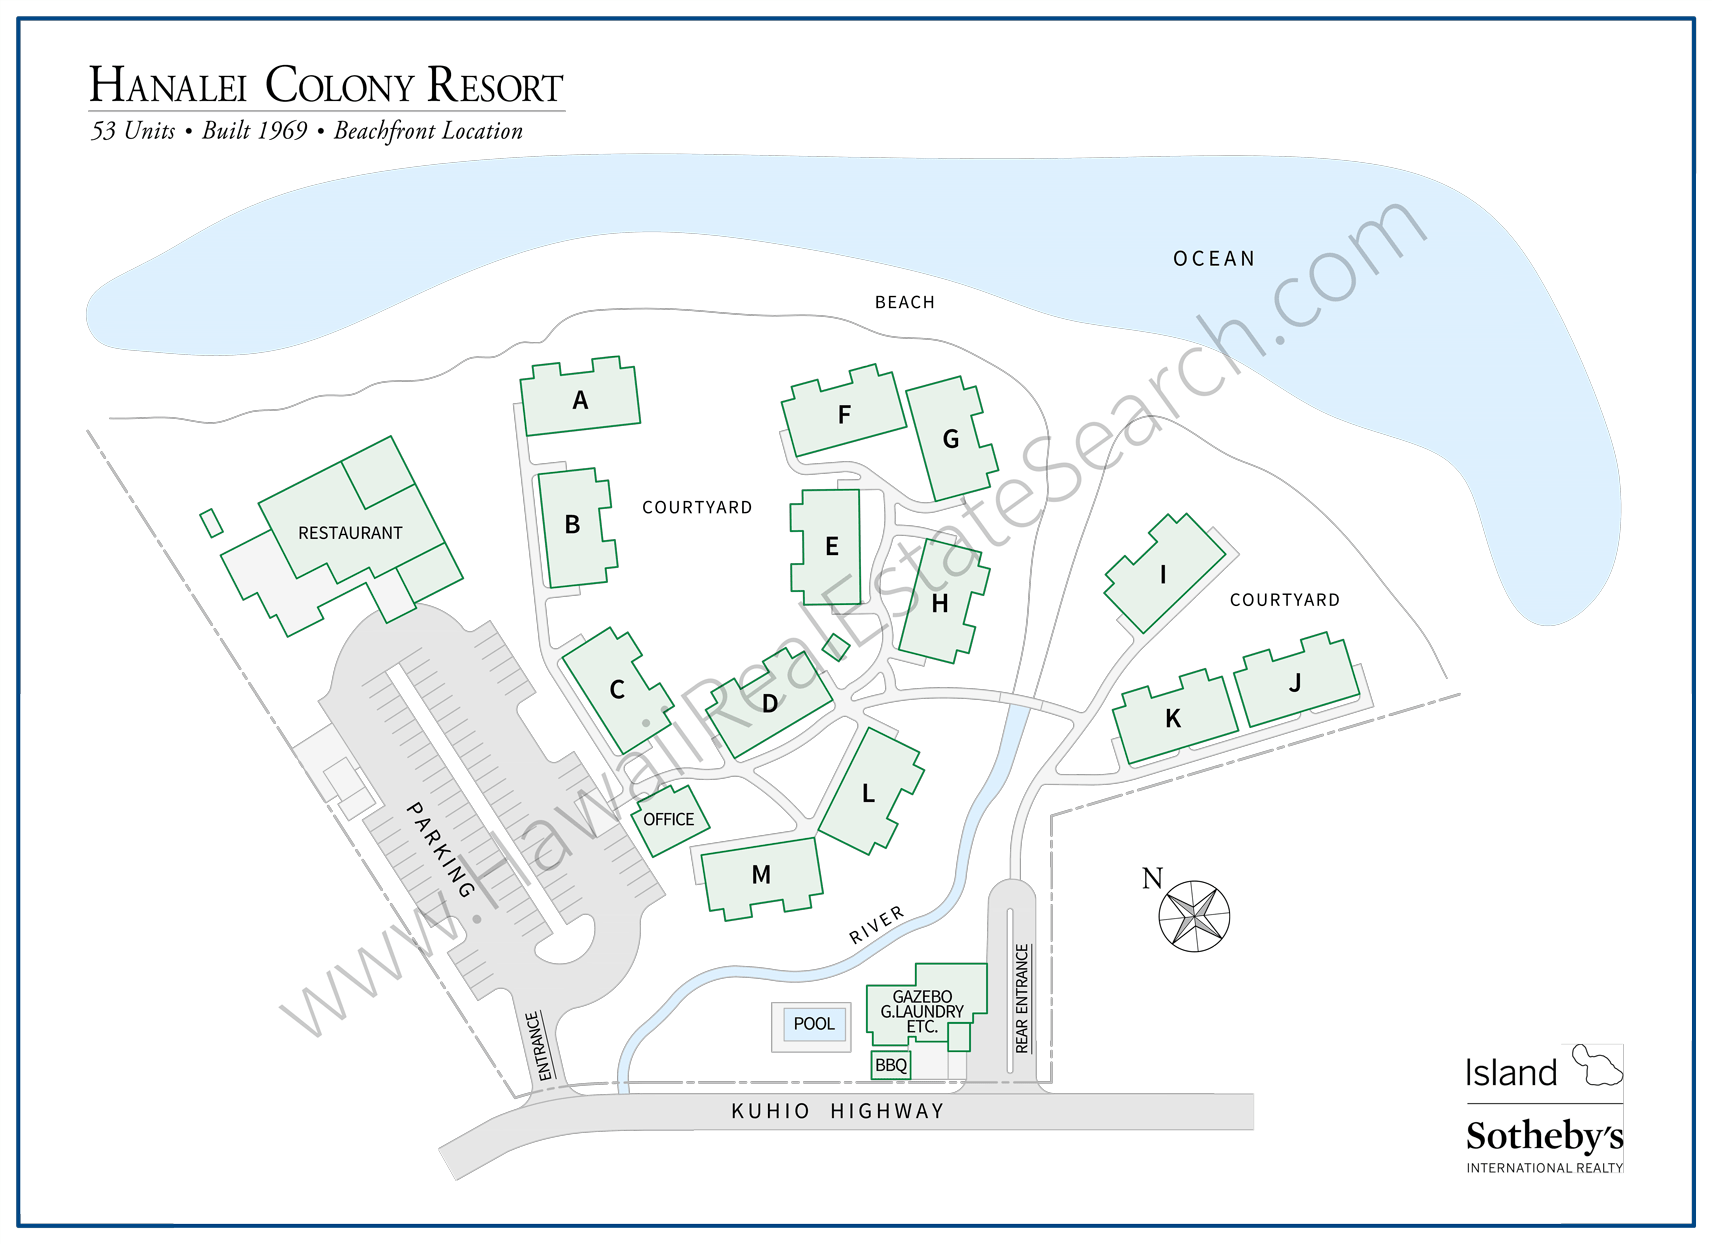 Map of Hanalei Colony Resort